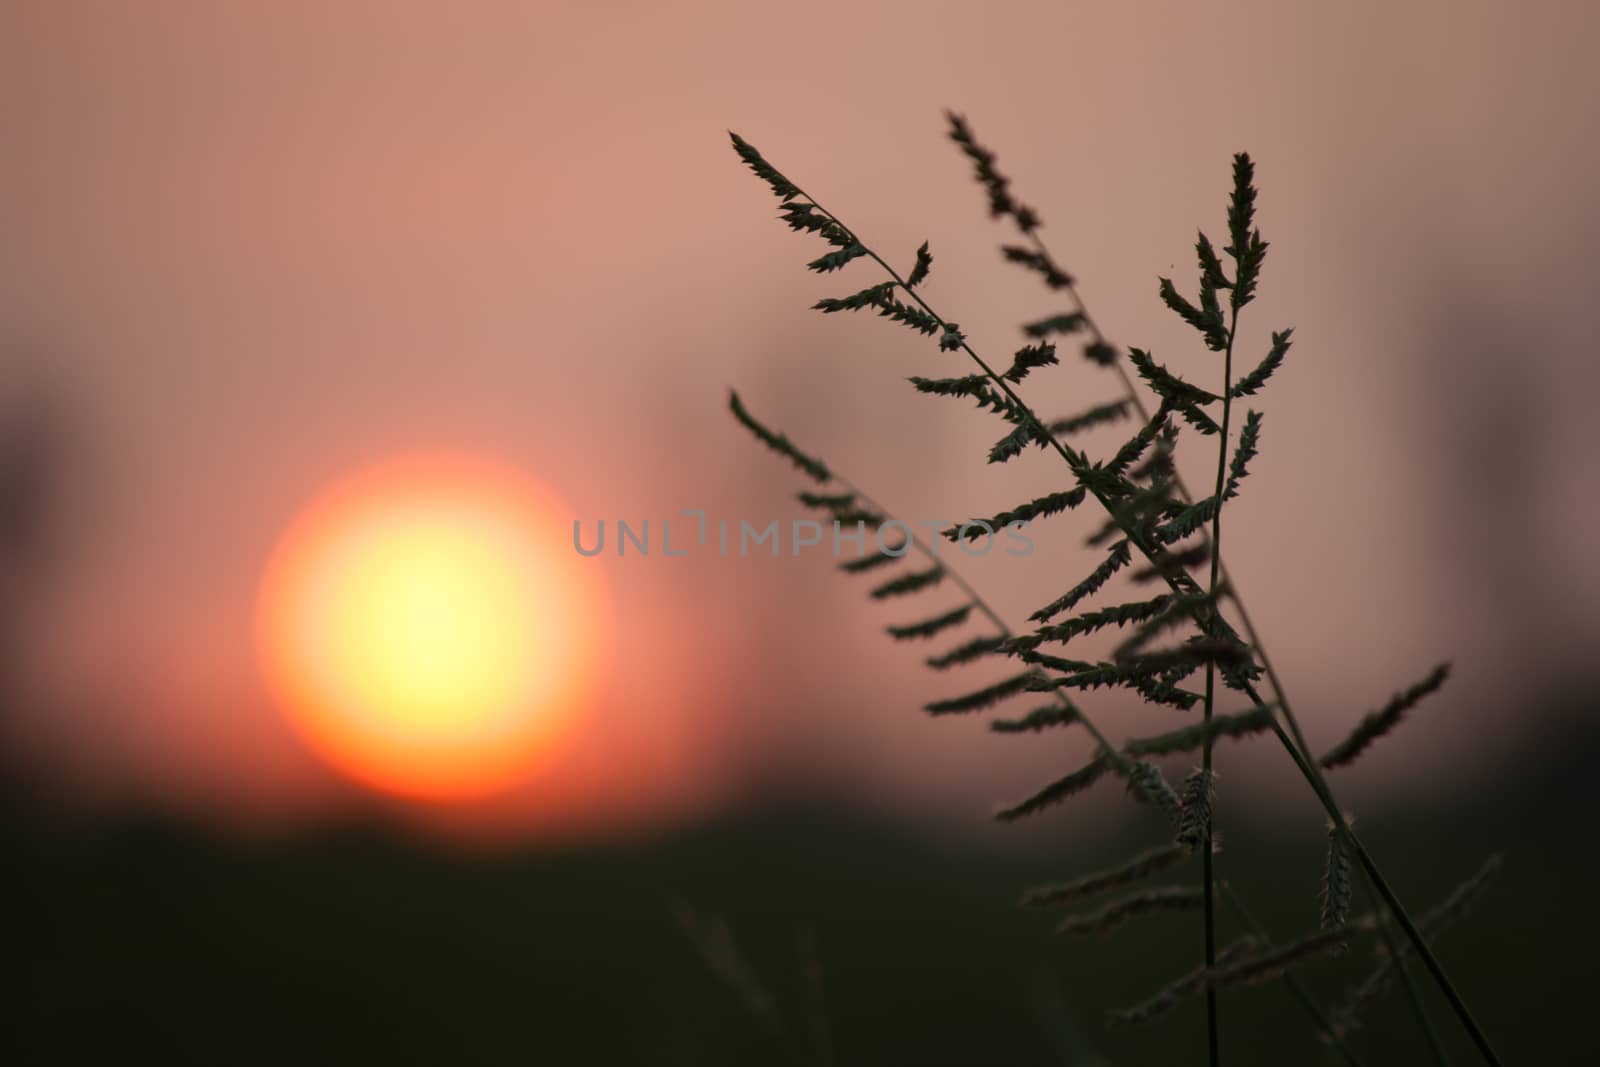 grass close-up against setting sun